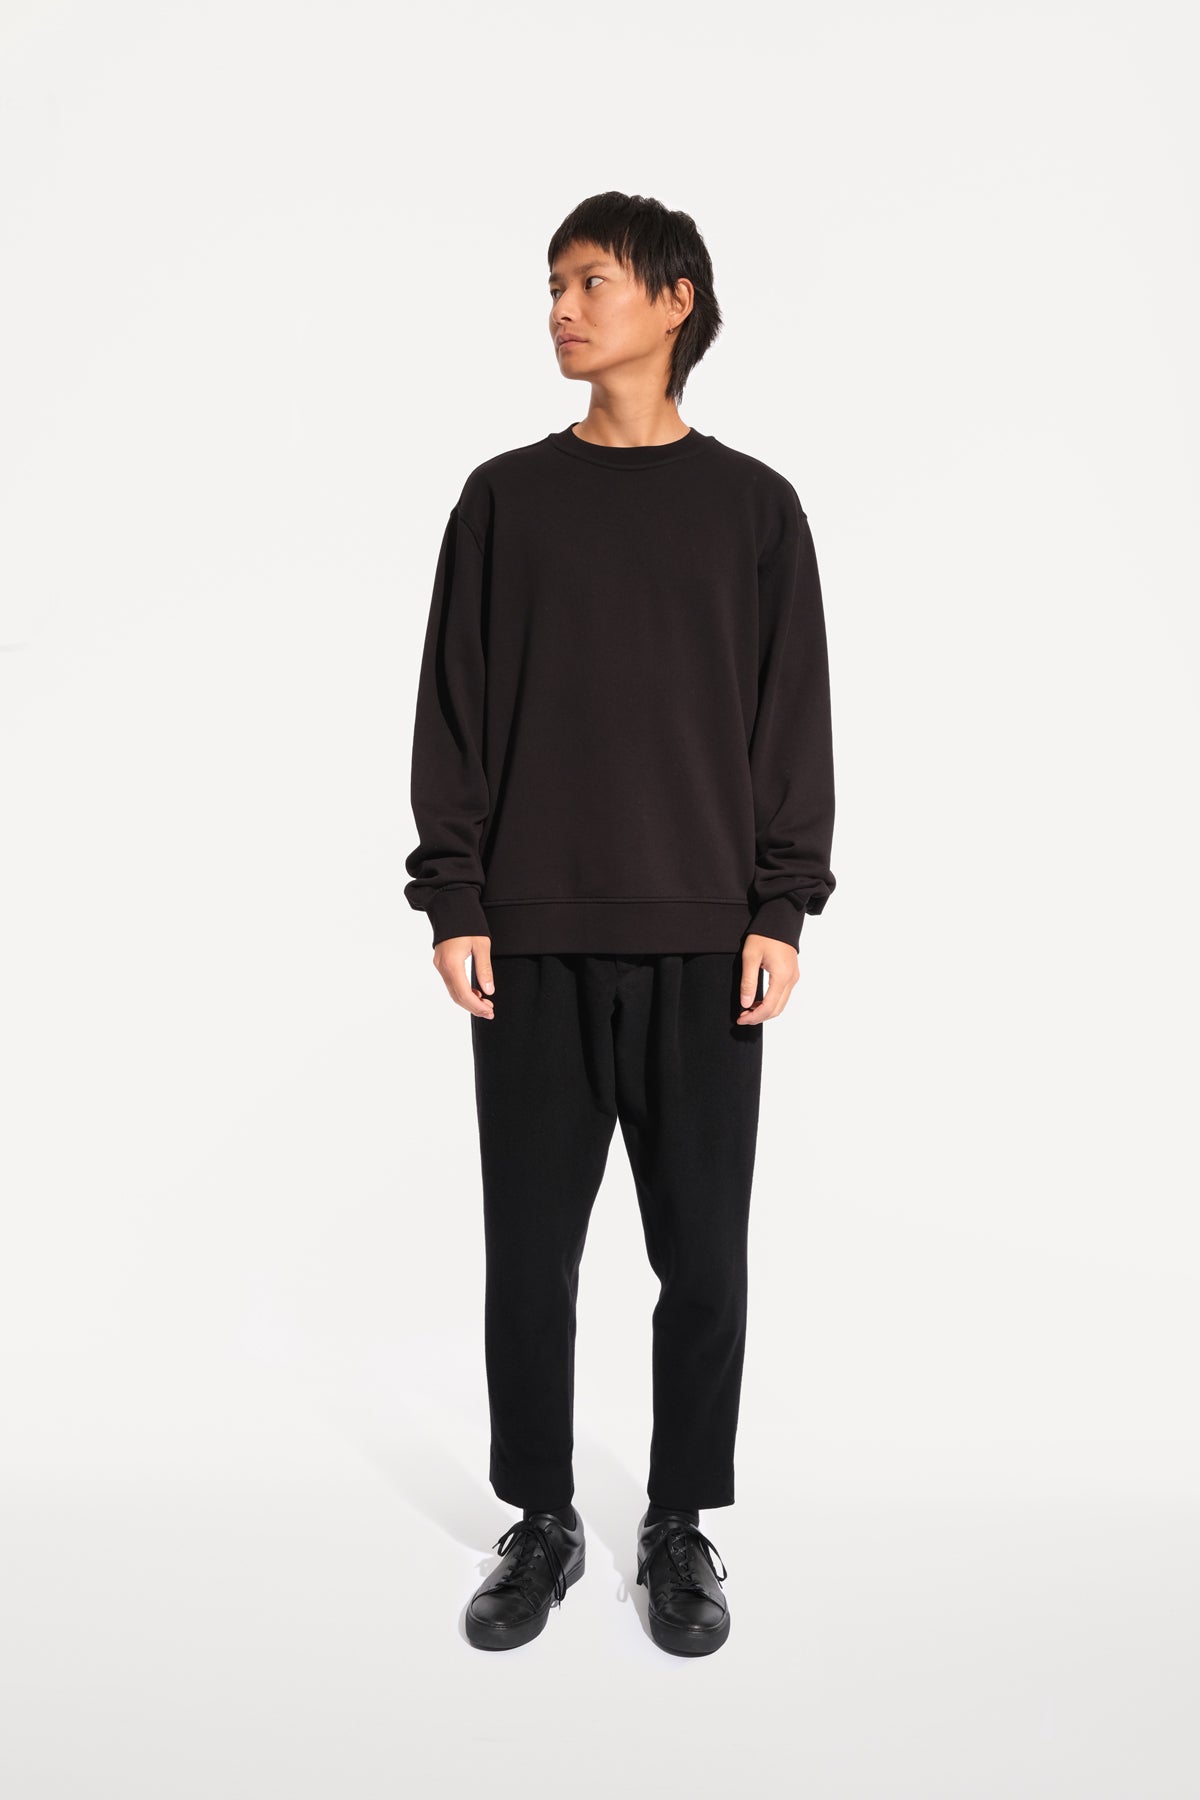 oftt - 02- reversible sweatshirt - black - organic cotton fleece - image 1